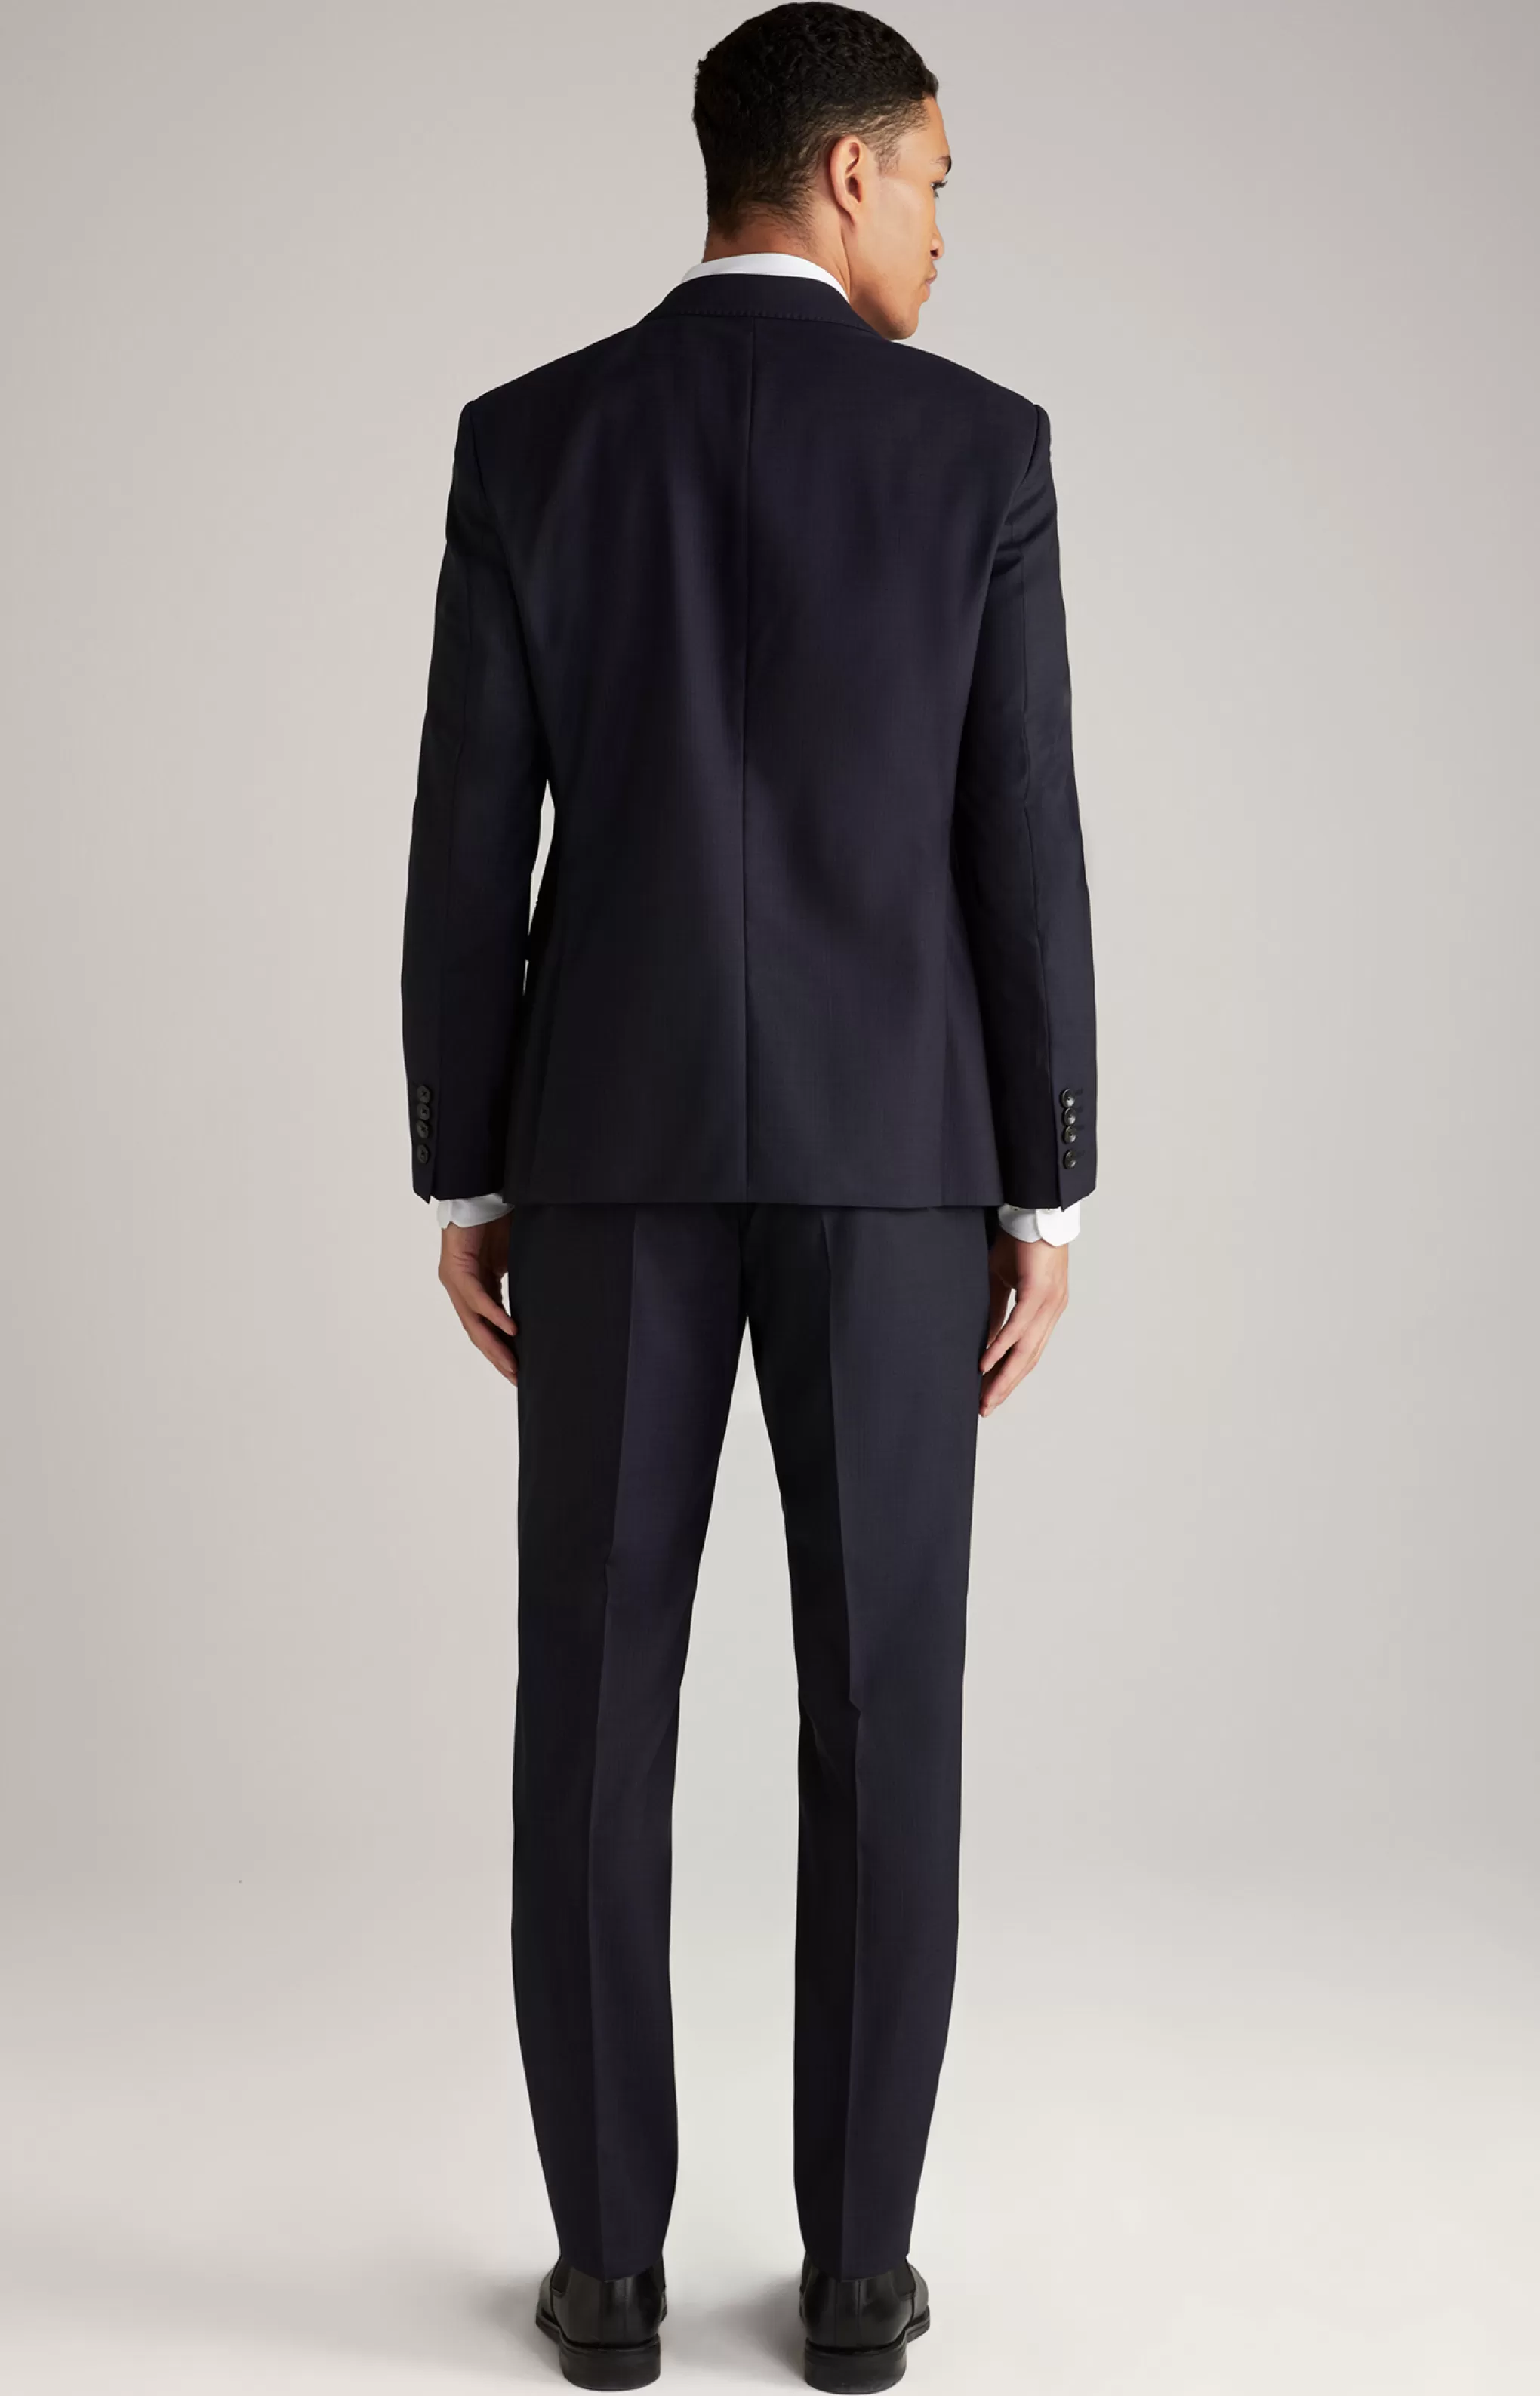 Suits | Clothing*JOOP Suits | Clothing Herby Blayr Virgin Wool Suit in